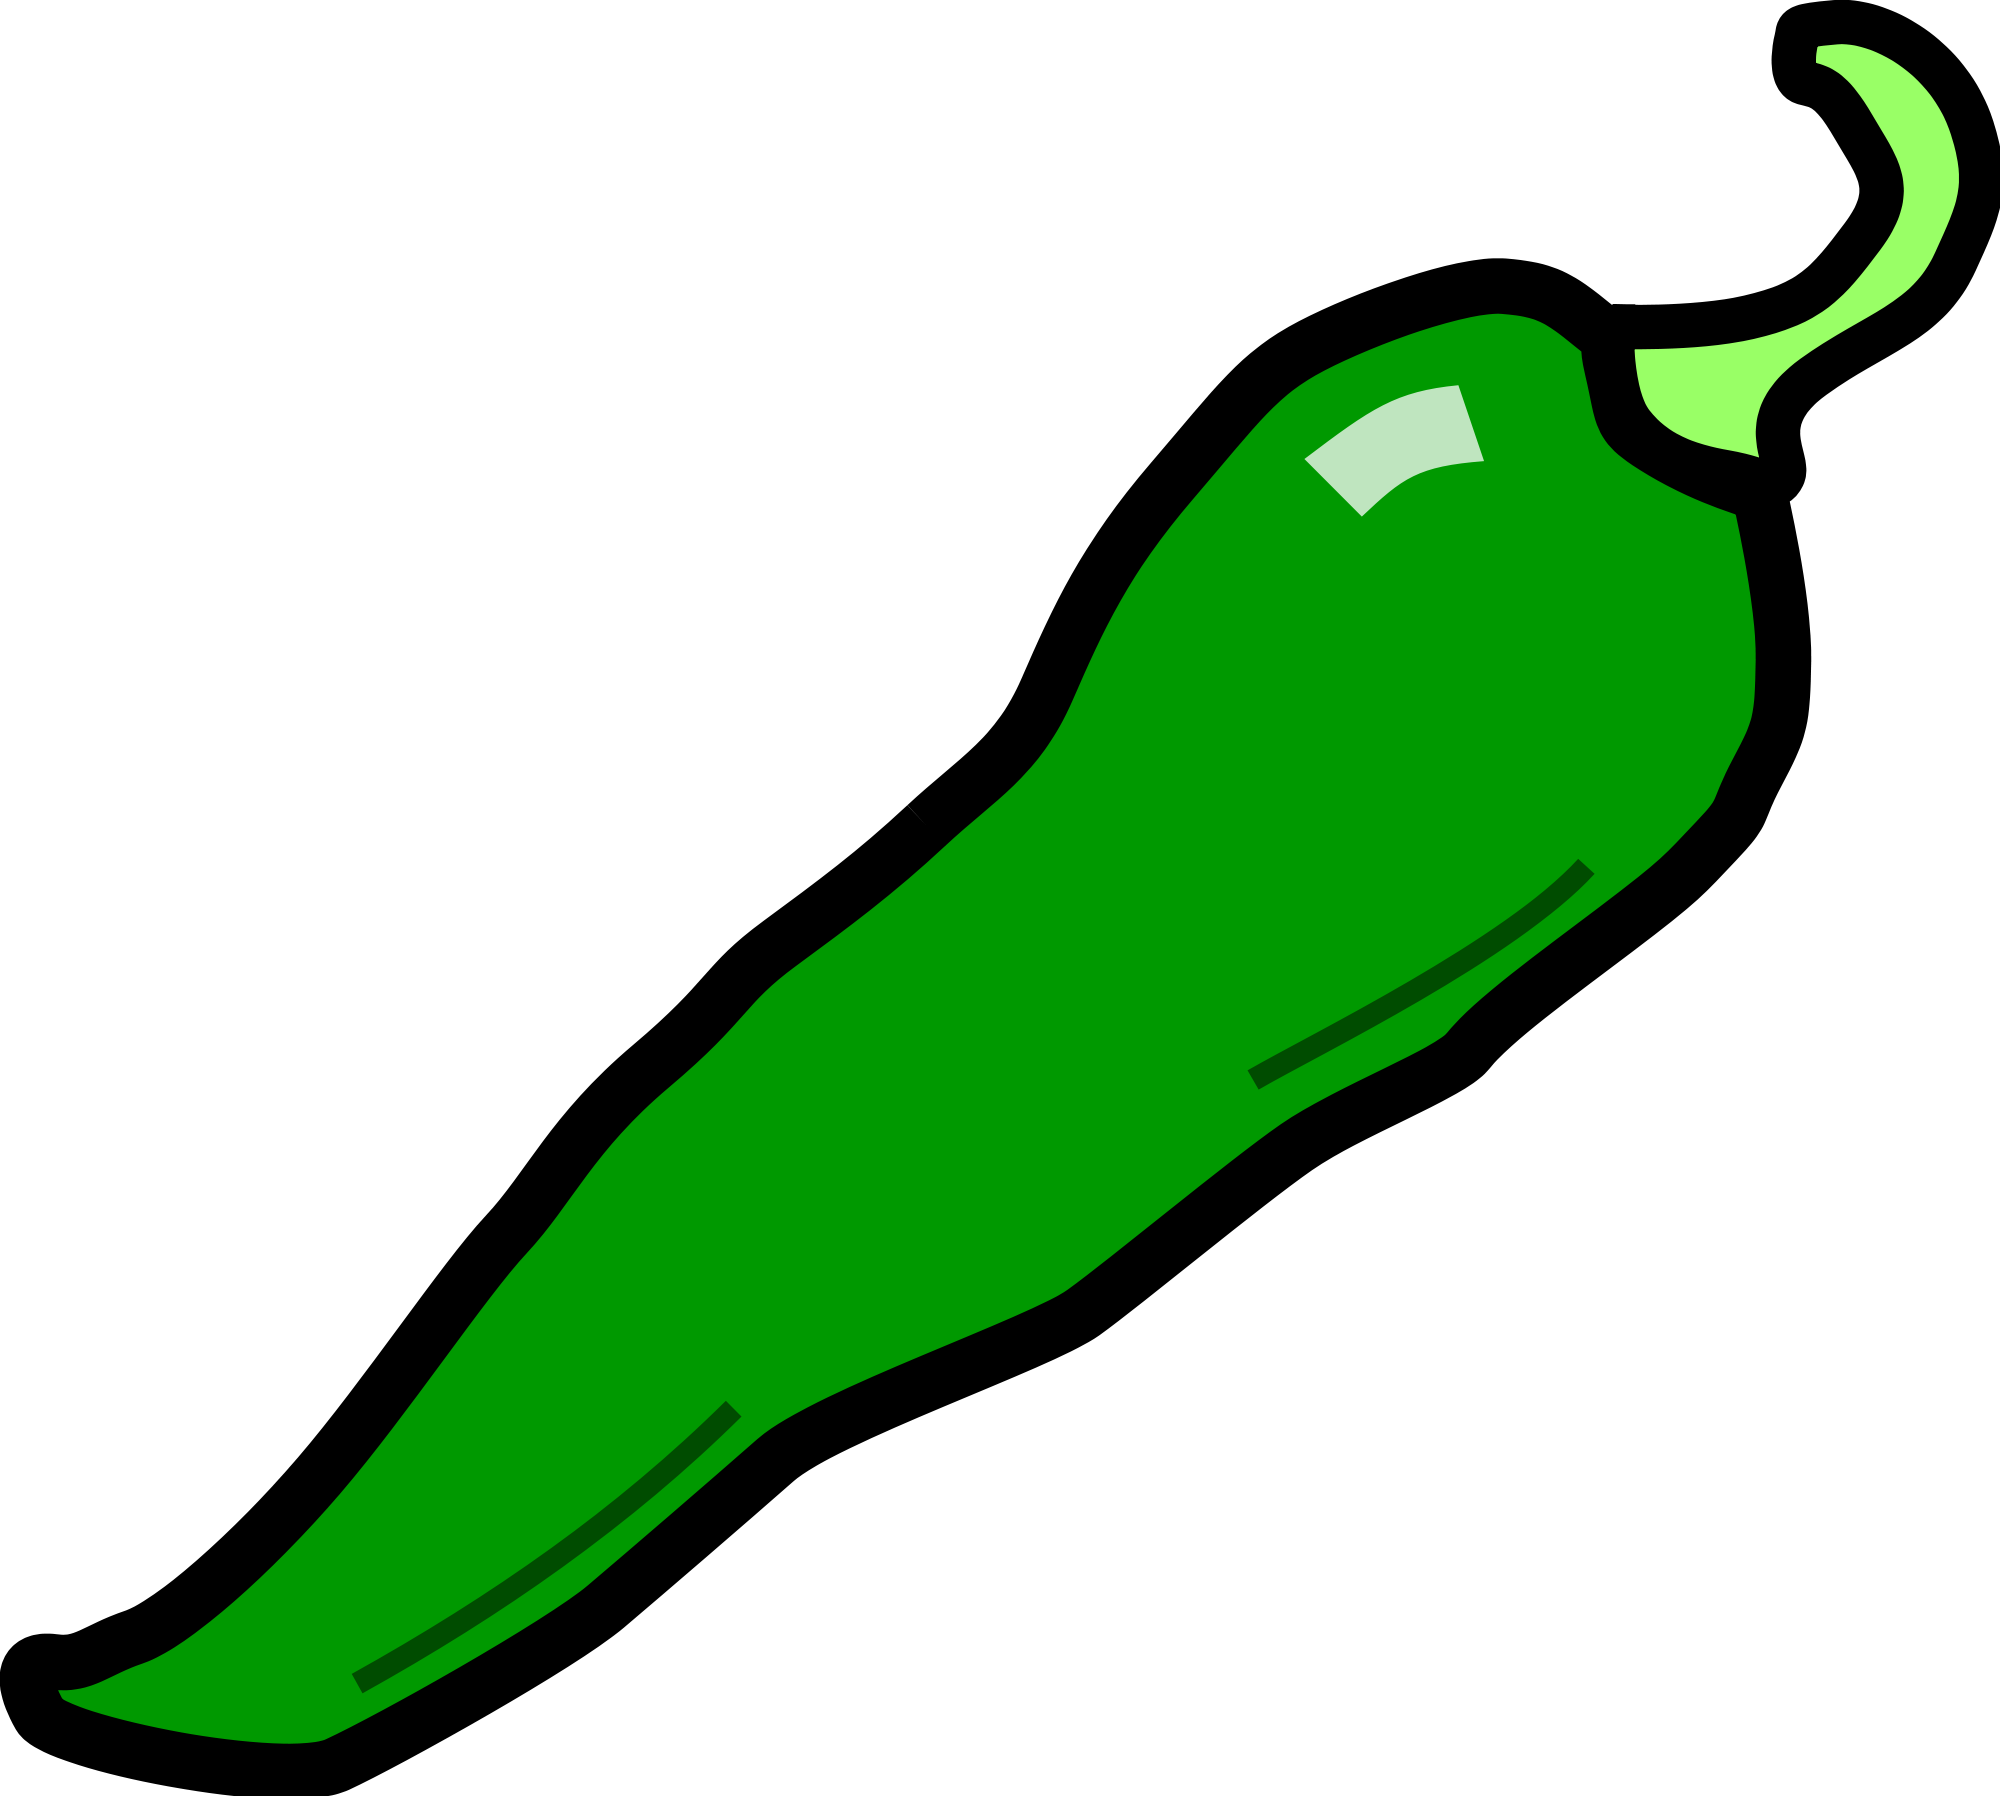 Chili pepper cartoon clipart 2